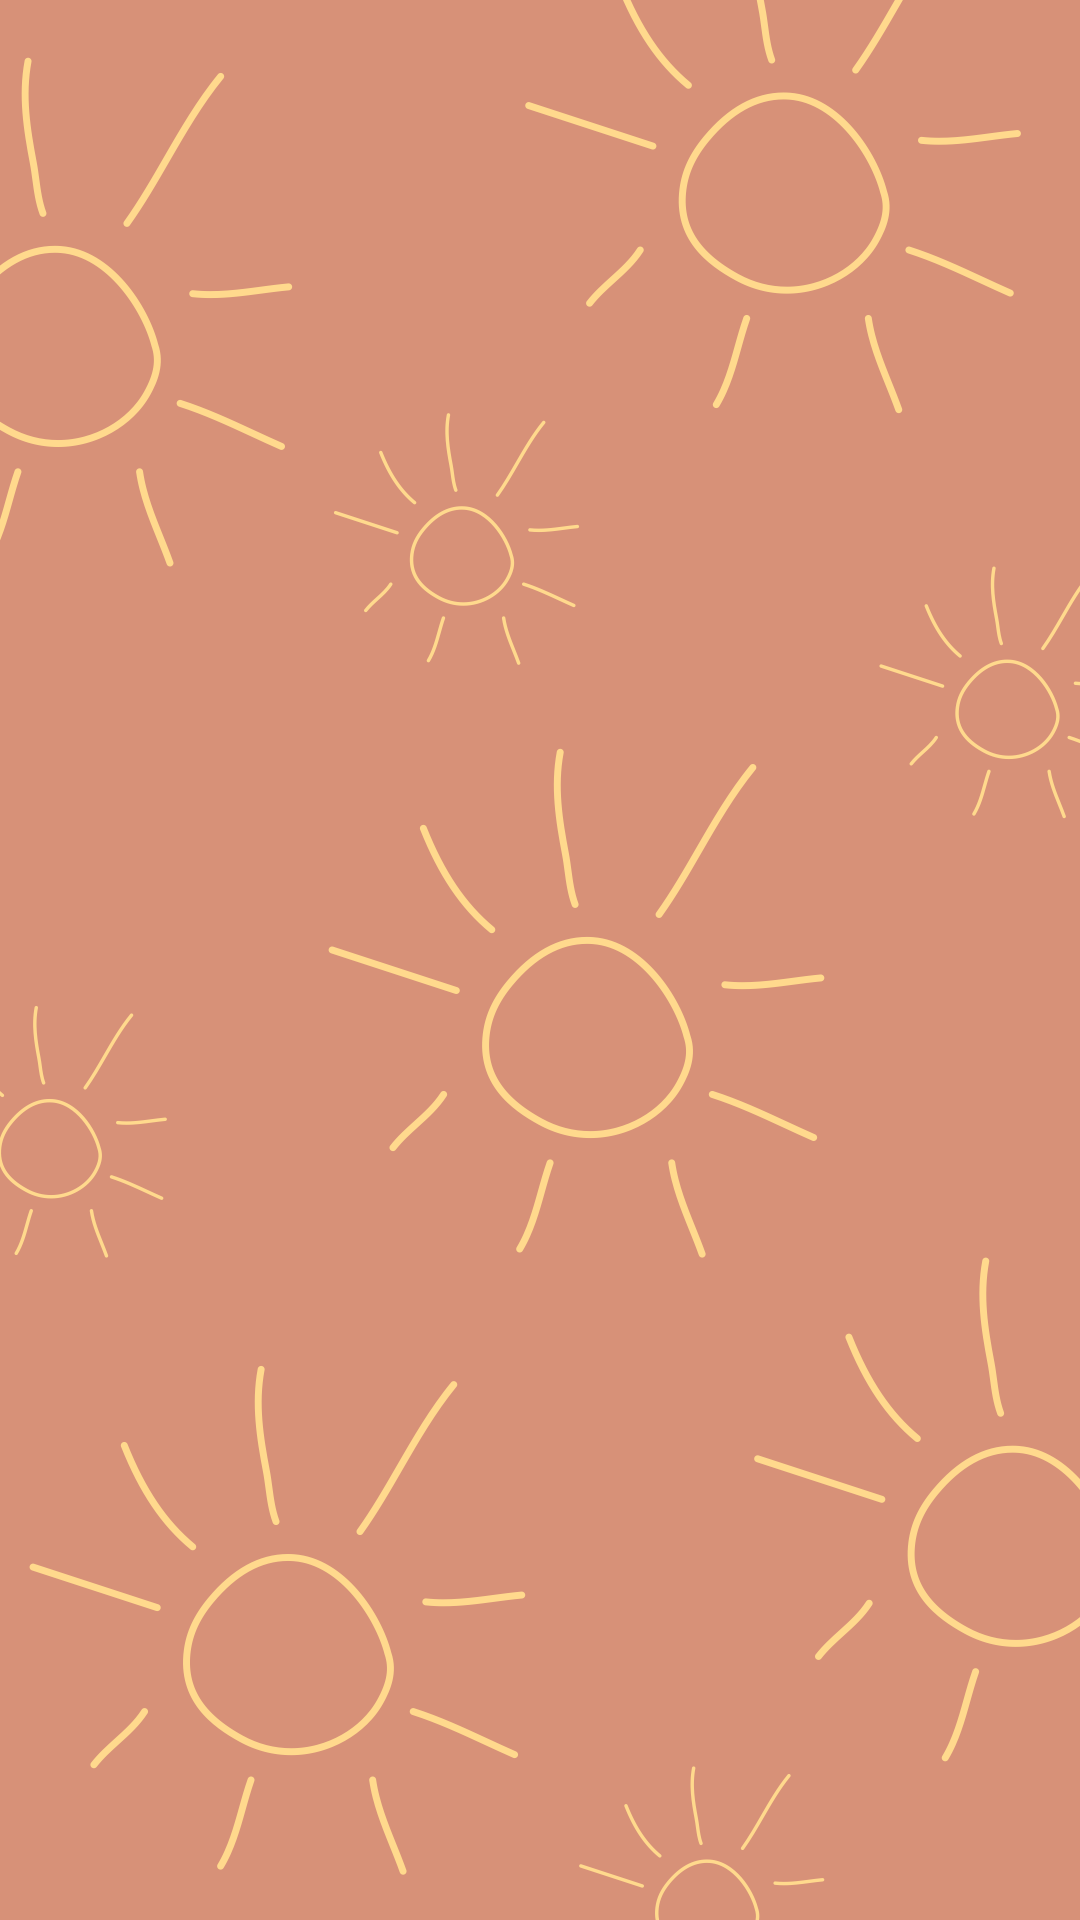 A pattern of suns on an orange background - Boho